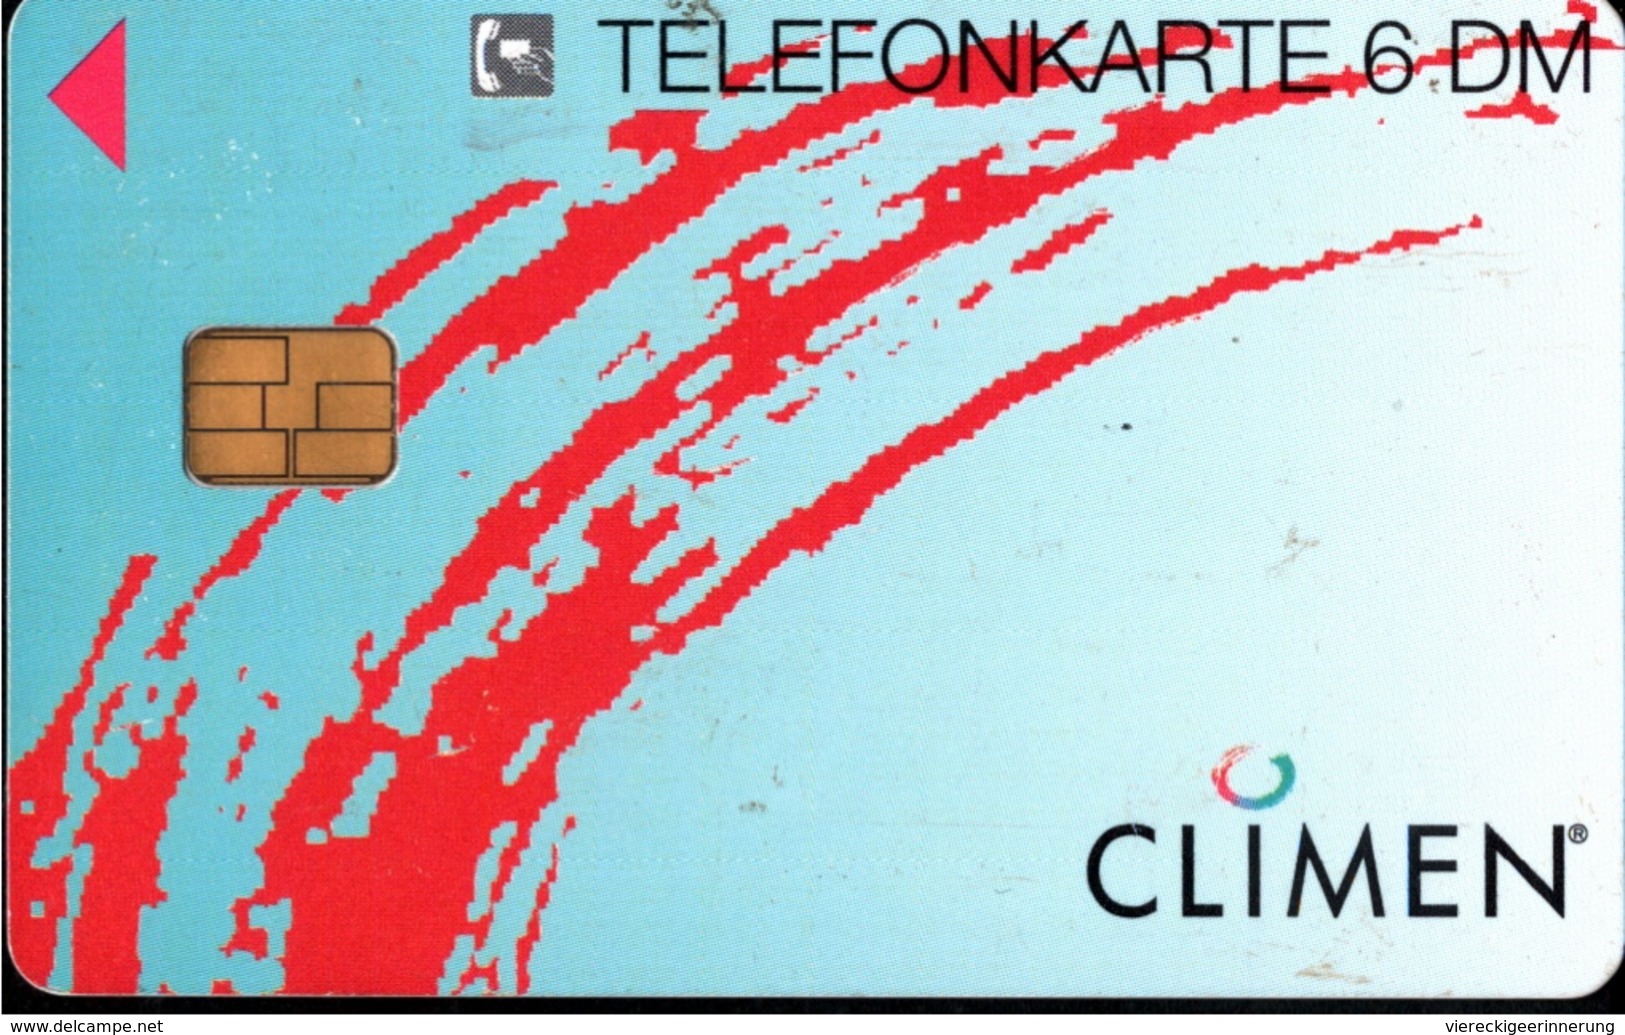 ! Telefonkarte, Telecarte, Phonecard, 1996, O799, Auflage 3000, Schering, Climen, Germany - O-Reeksen : Klantenreeksen